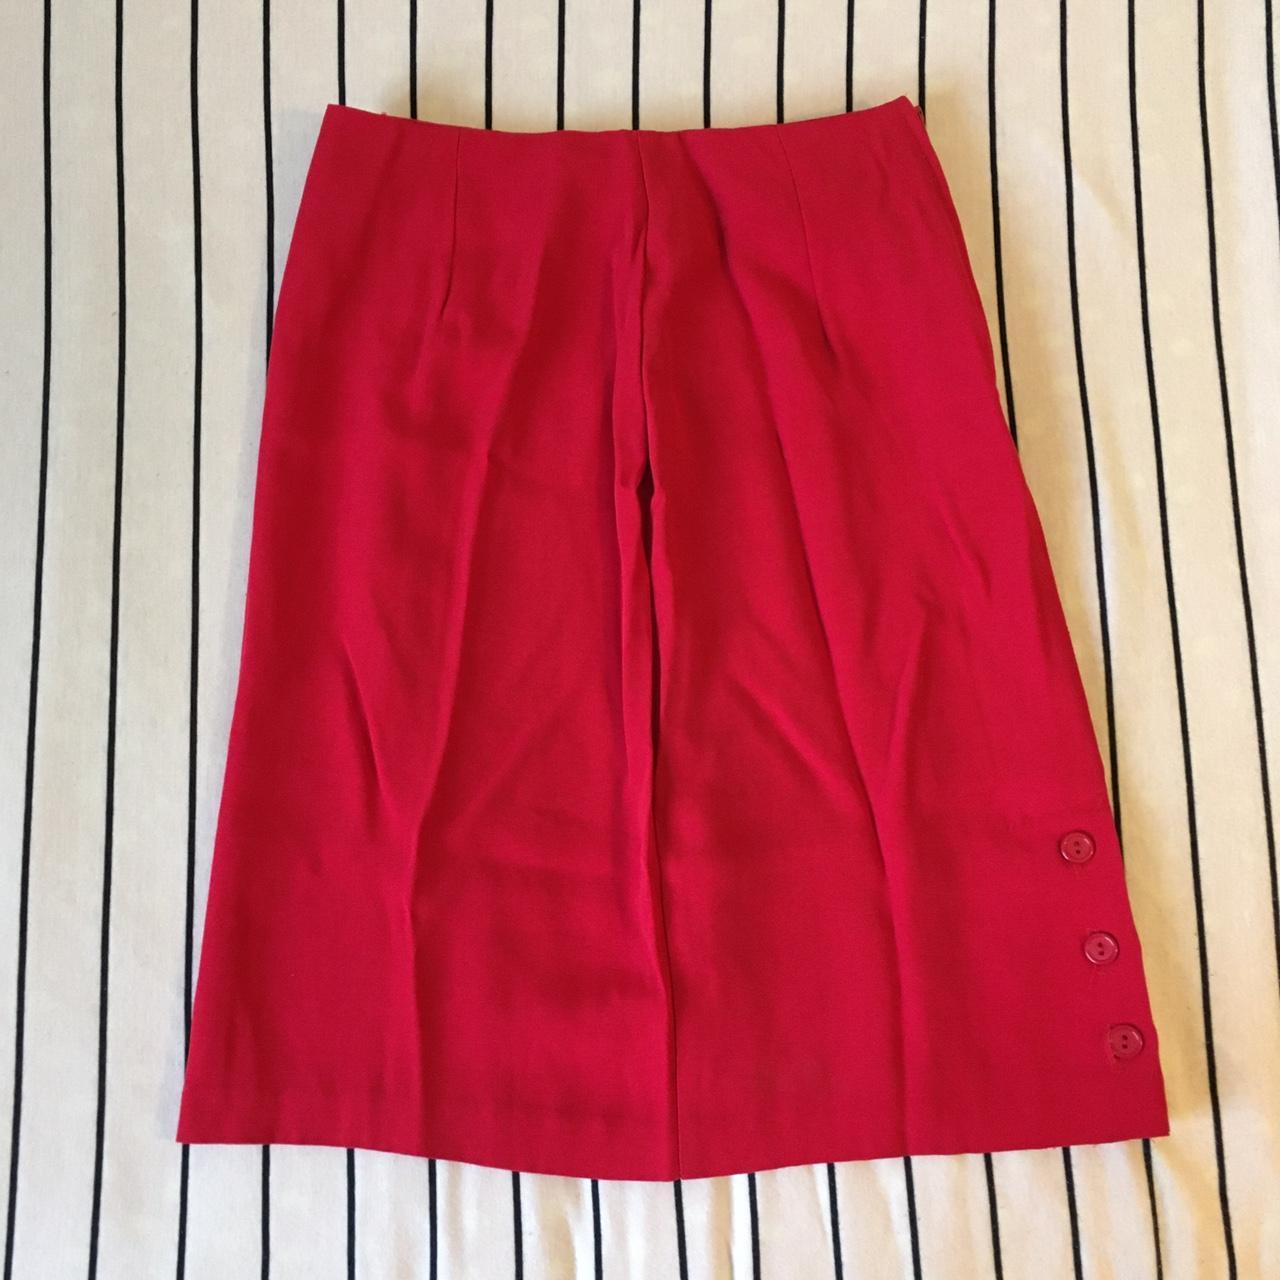 Marni Women's Red Skirt